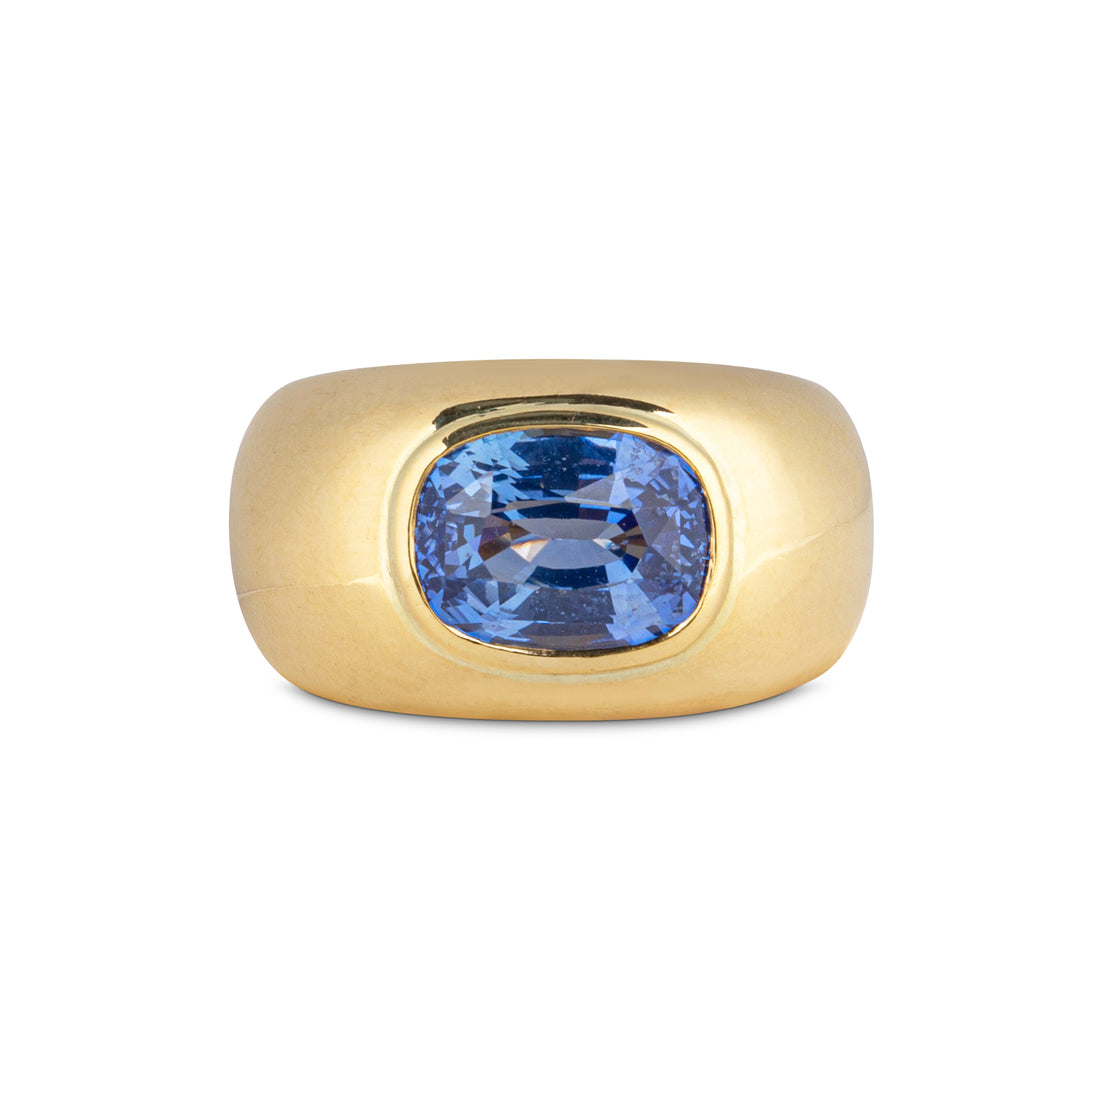  Gold & Sapphire Bombé Ring by Jessie Thomas | The Cut London